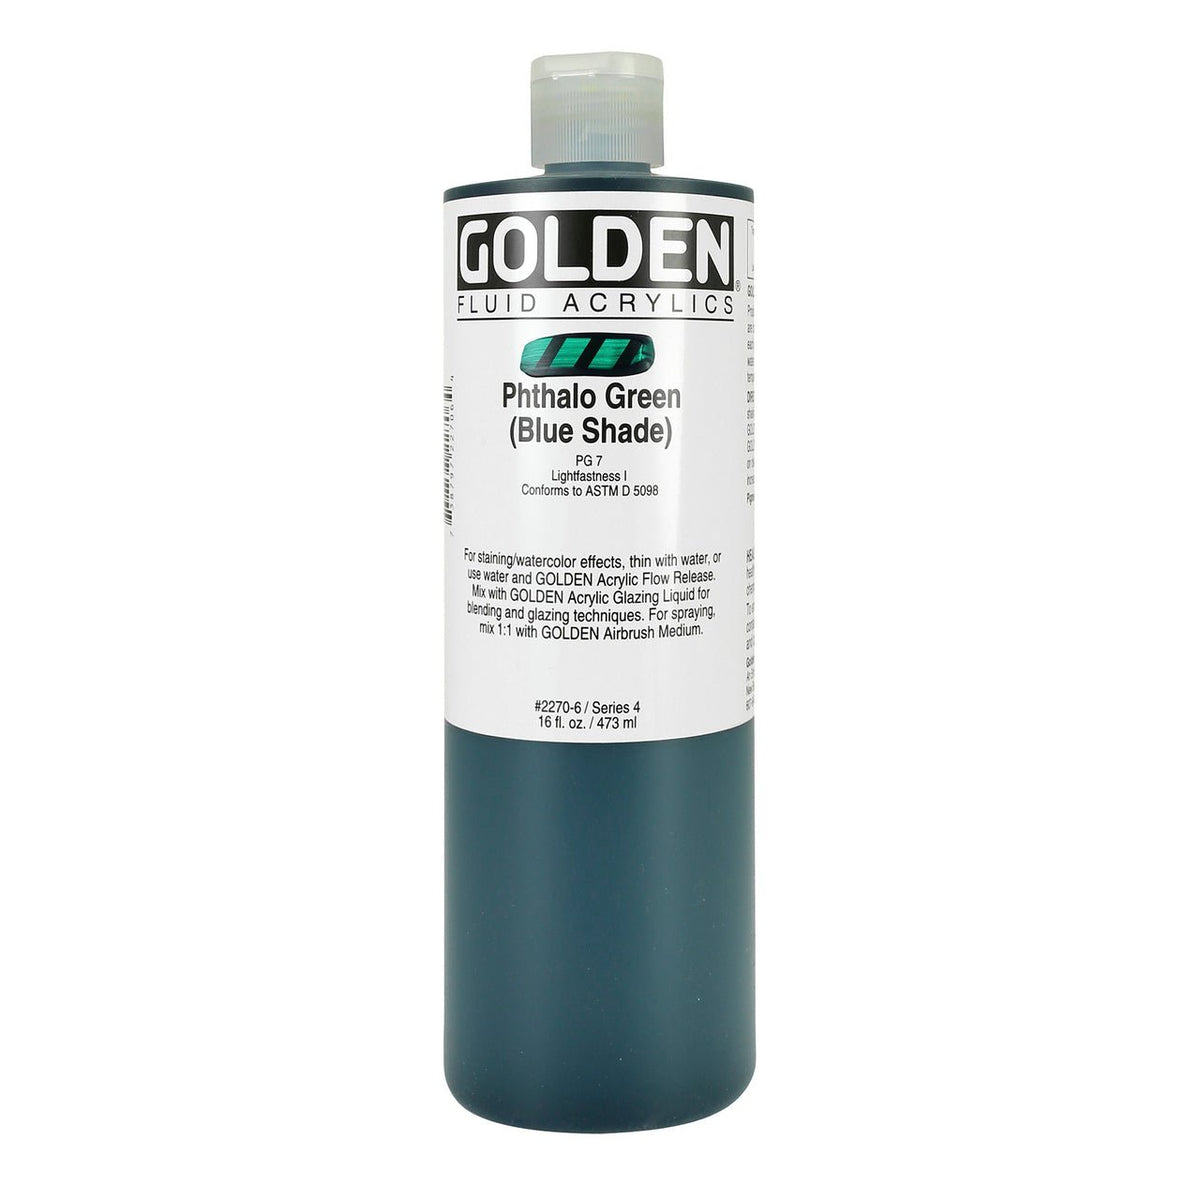 Golden Fluid Acrylic - Phthalo Green (Blue Shade) 16 oz.